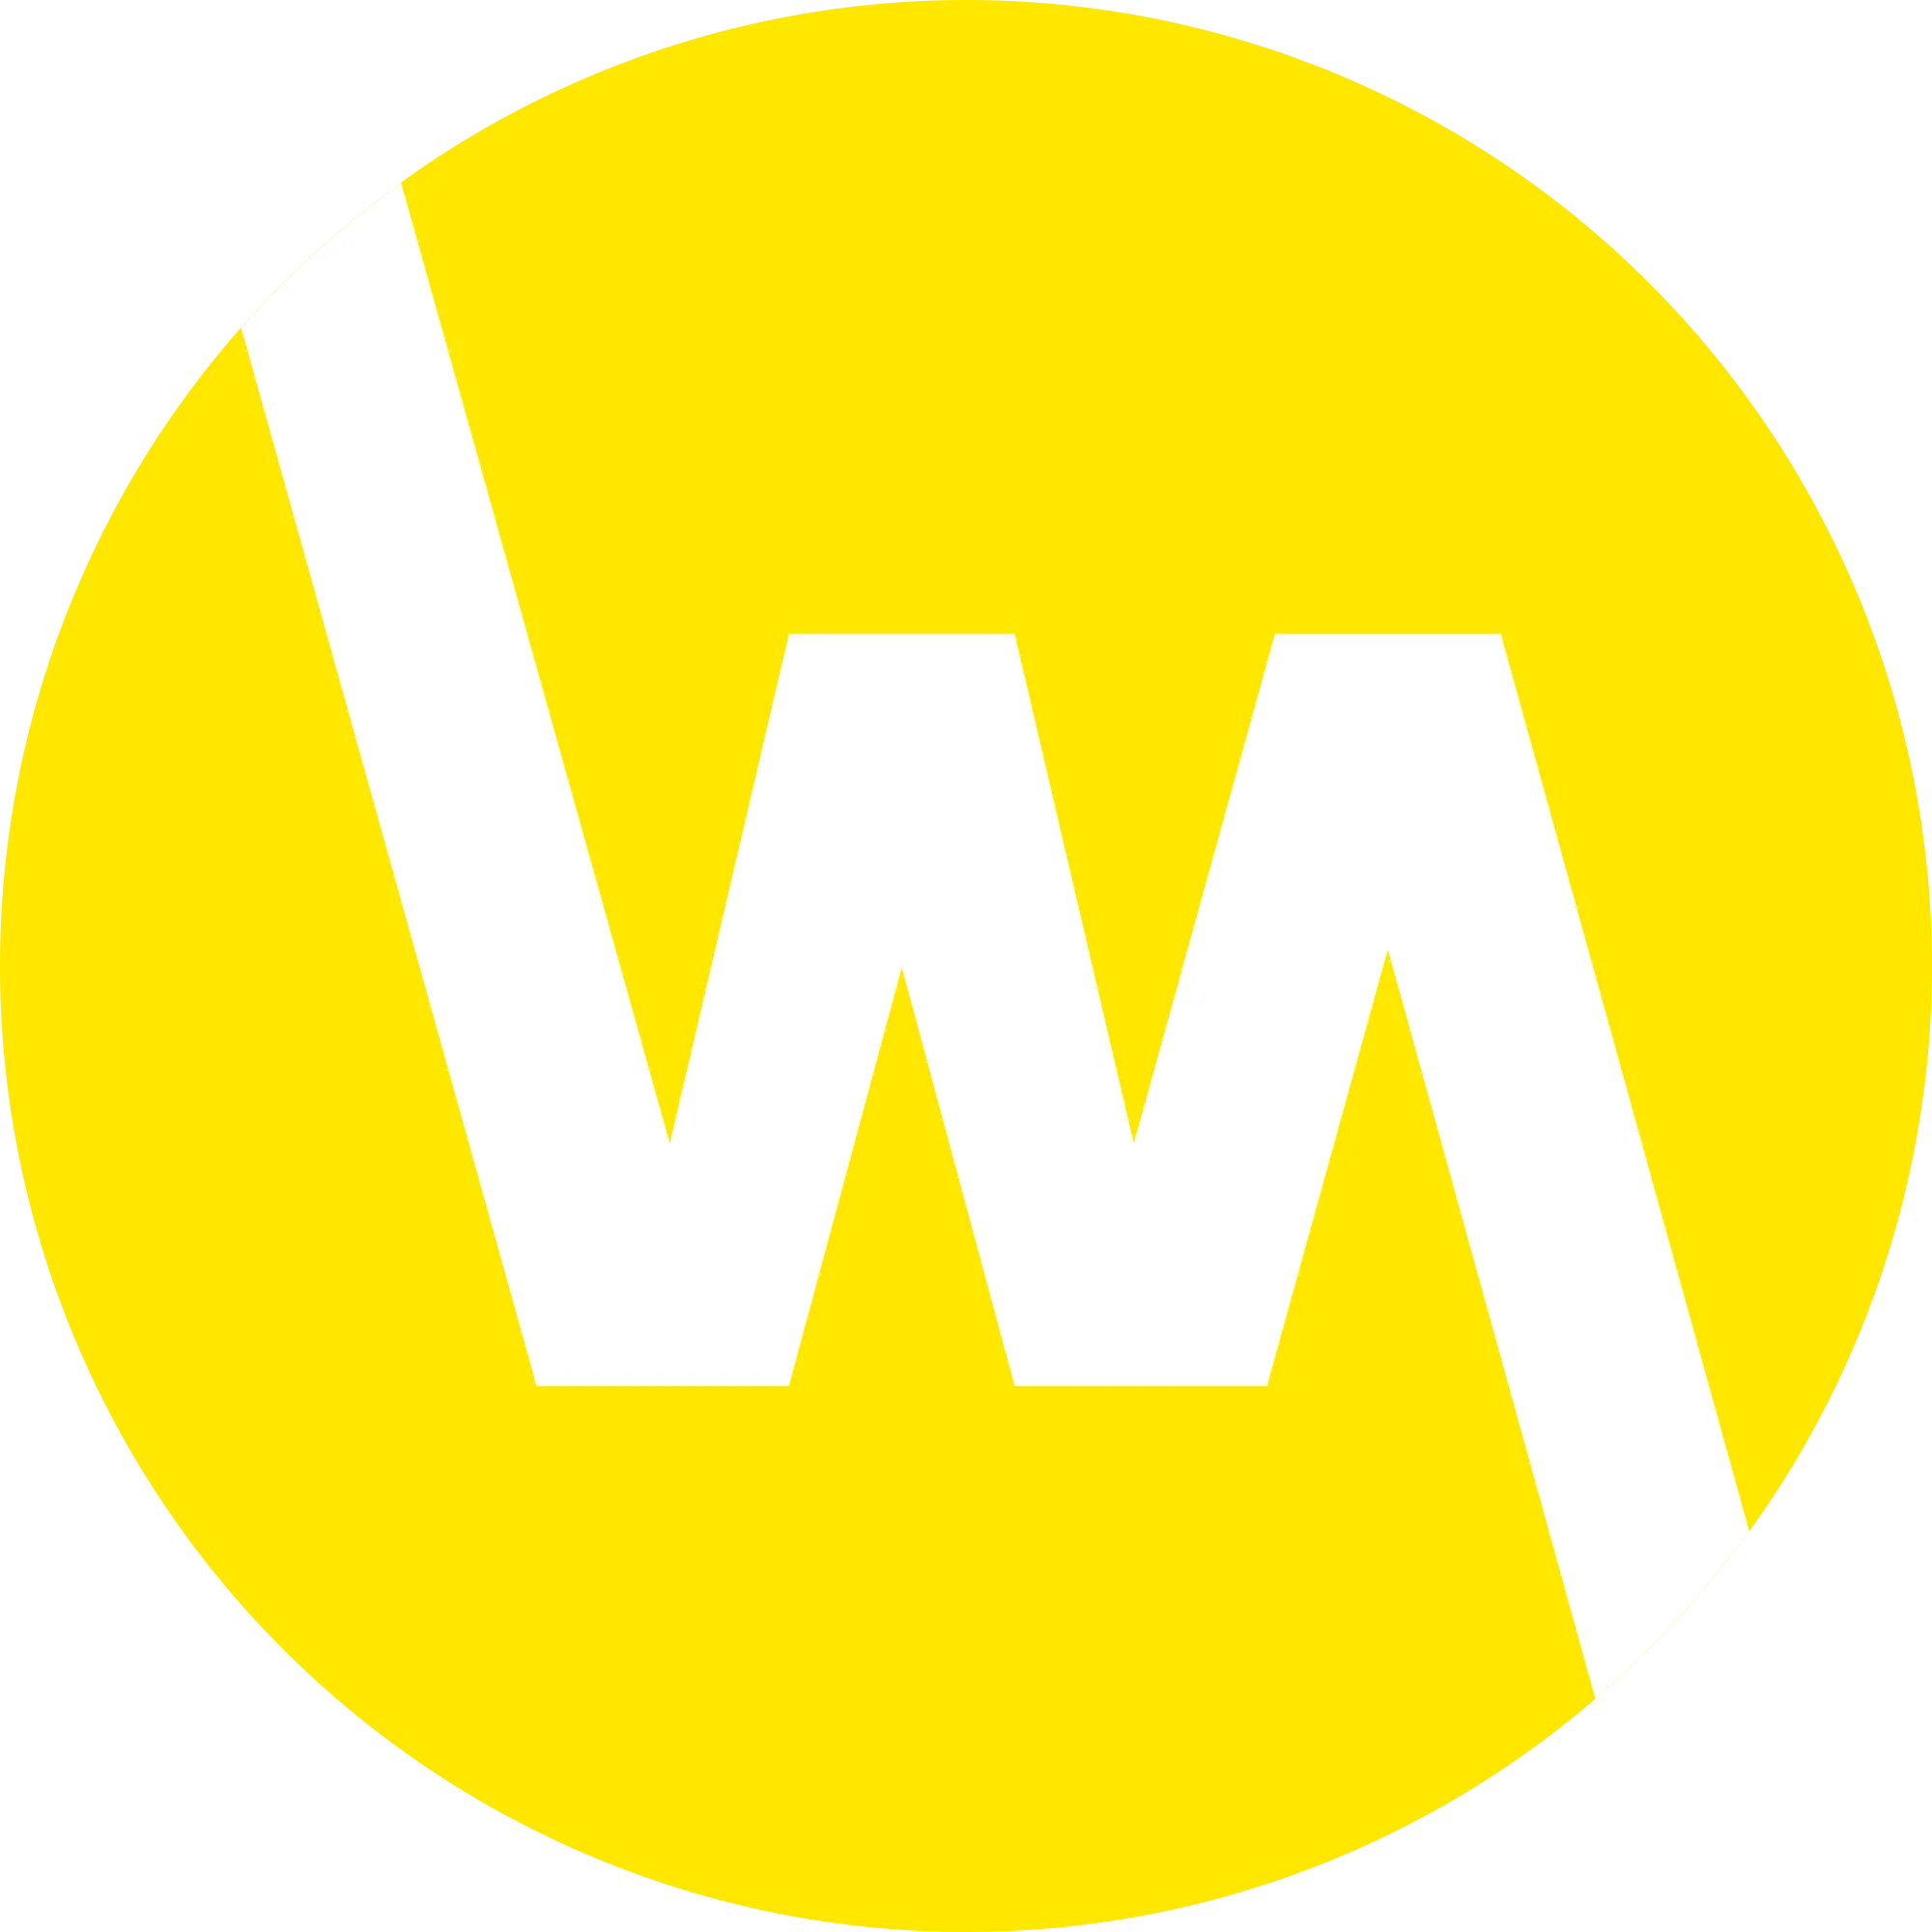 WePower logo in png format